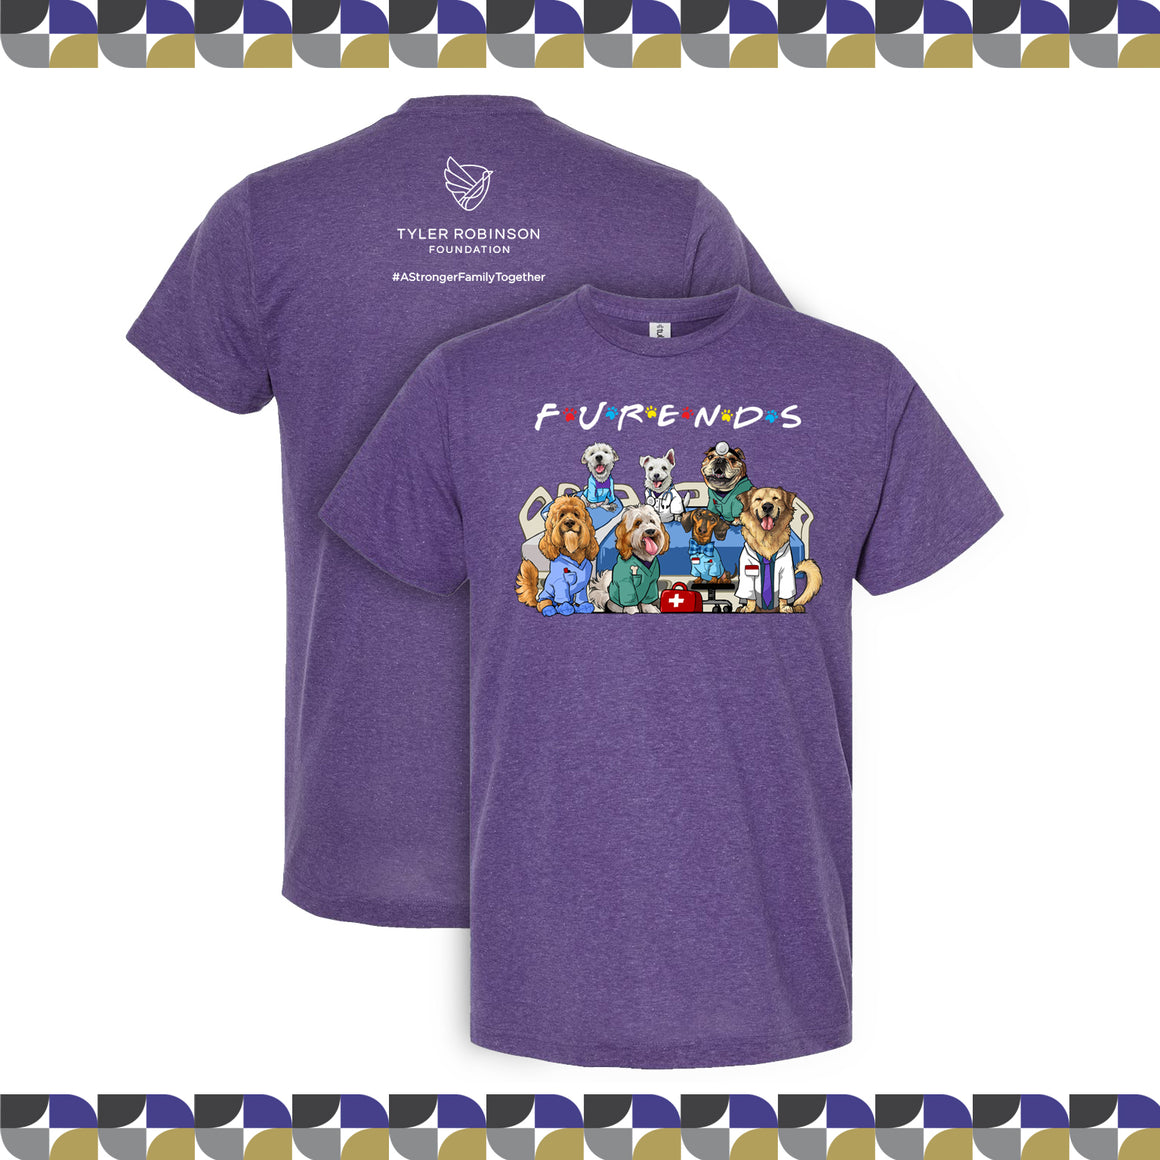 TRF - "FURENDS" Adult Heather Purple Short Sleeve T-Shirt